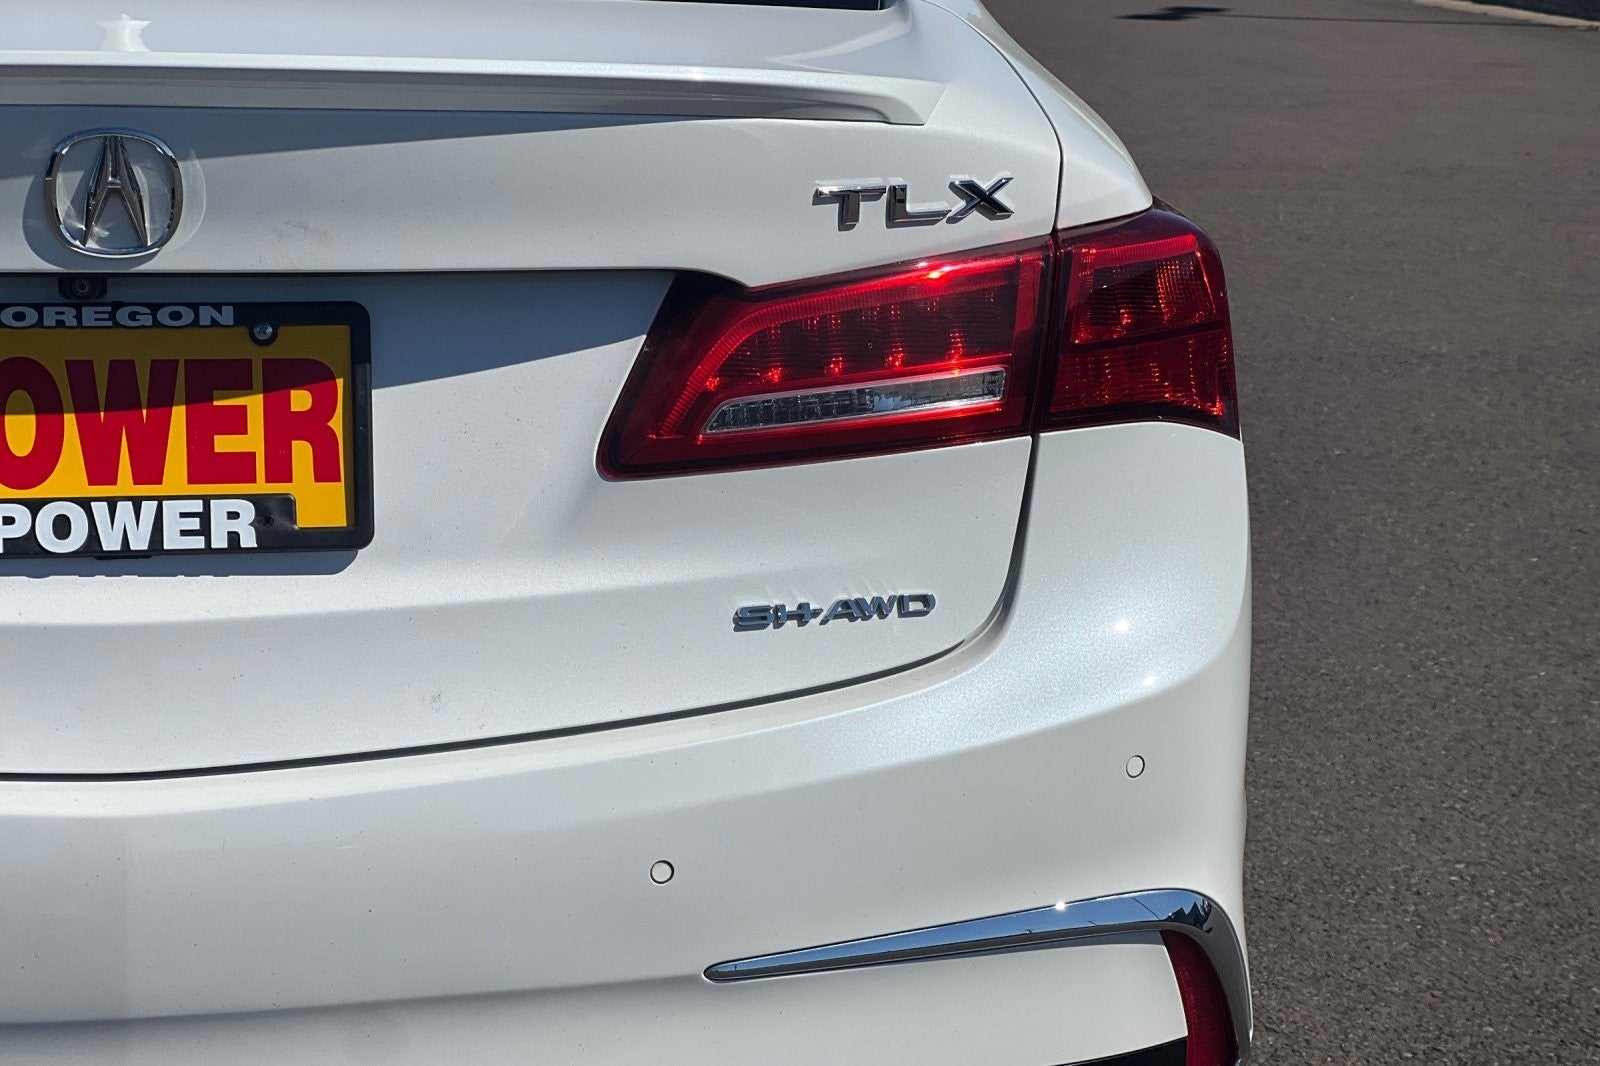 2018 Acura TLX w/Advance Pkg